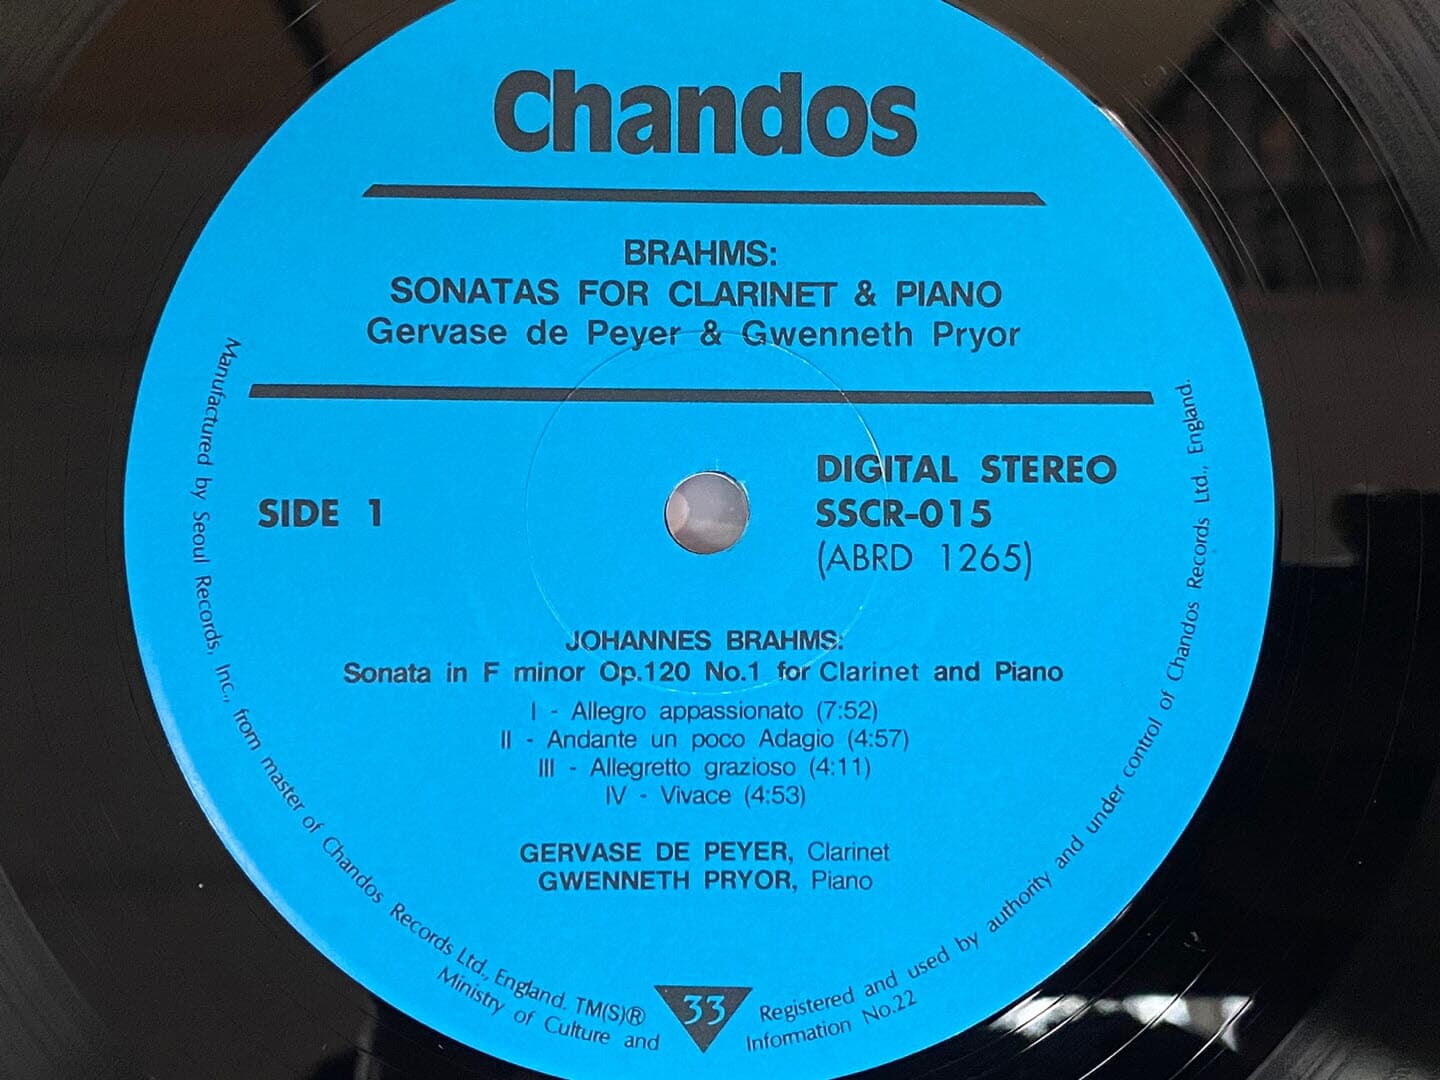 [LP] 제르바즈 드 페이에 - Gervase De Peyer - Brahms Sonatas for Clarinet and Piano Op.120 LP [서울-라이센스반]